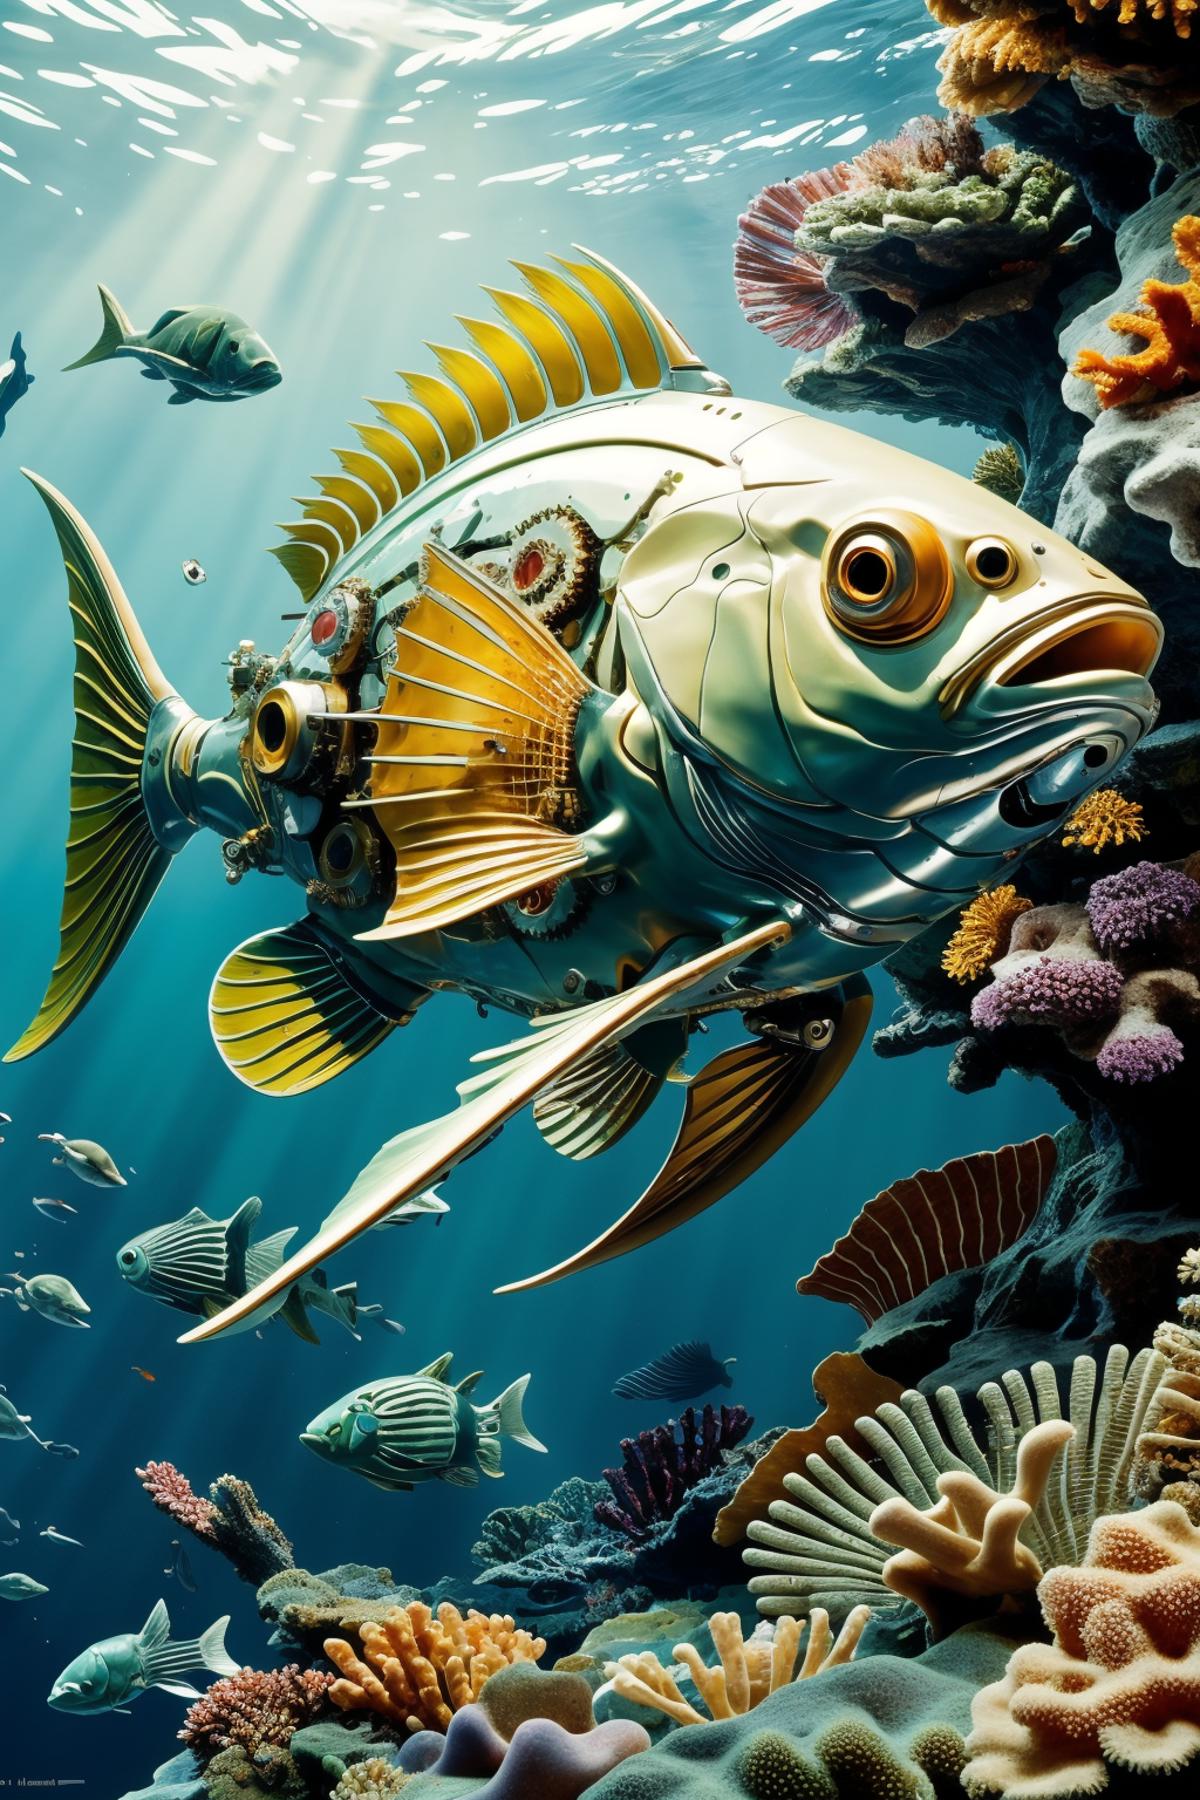 Mechanical fish image by InfiniteLight